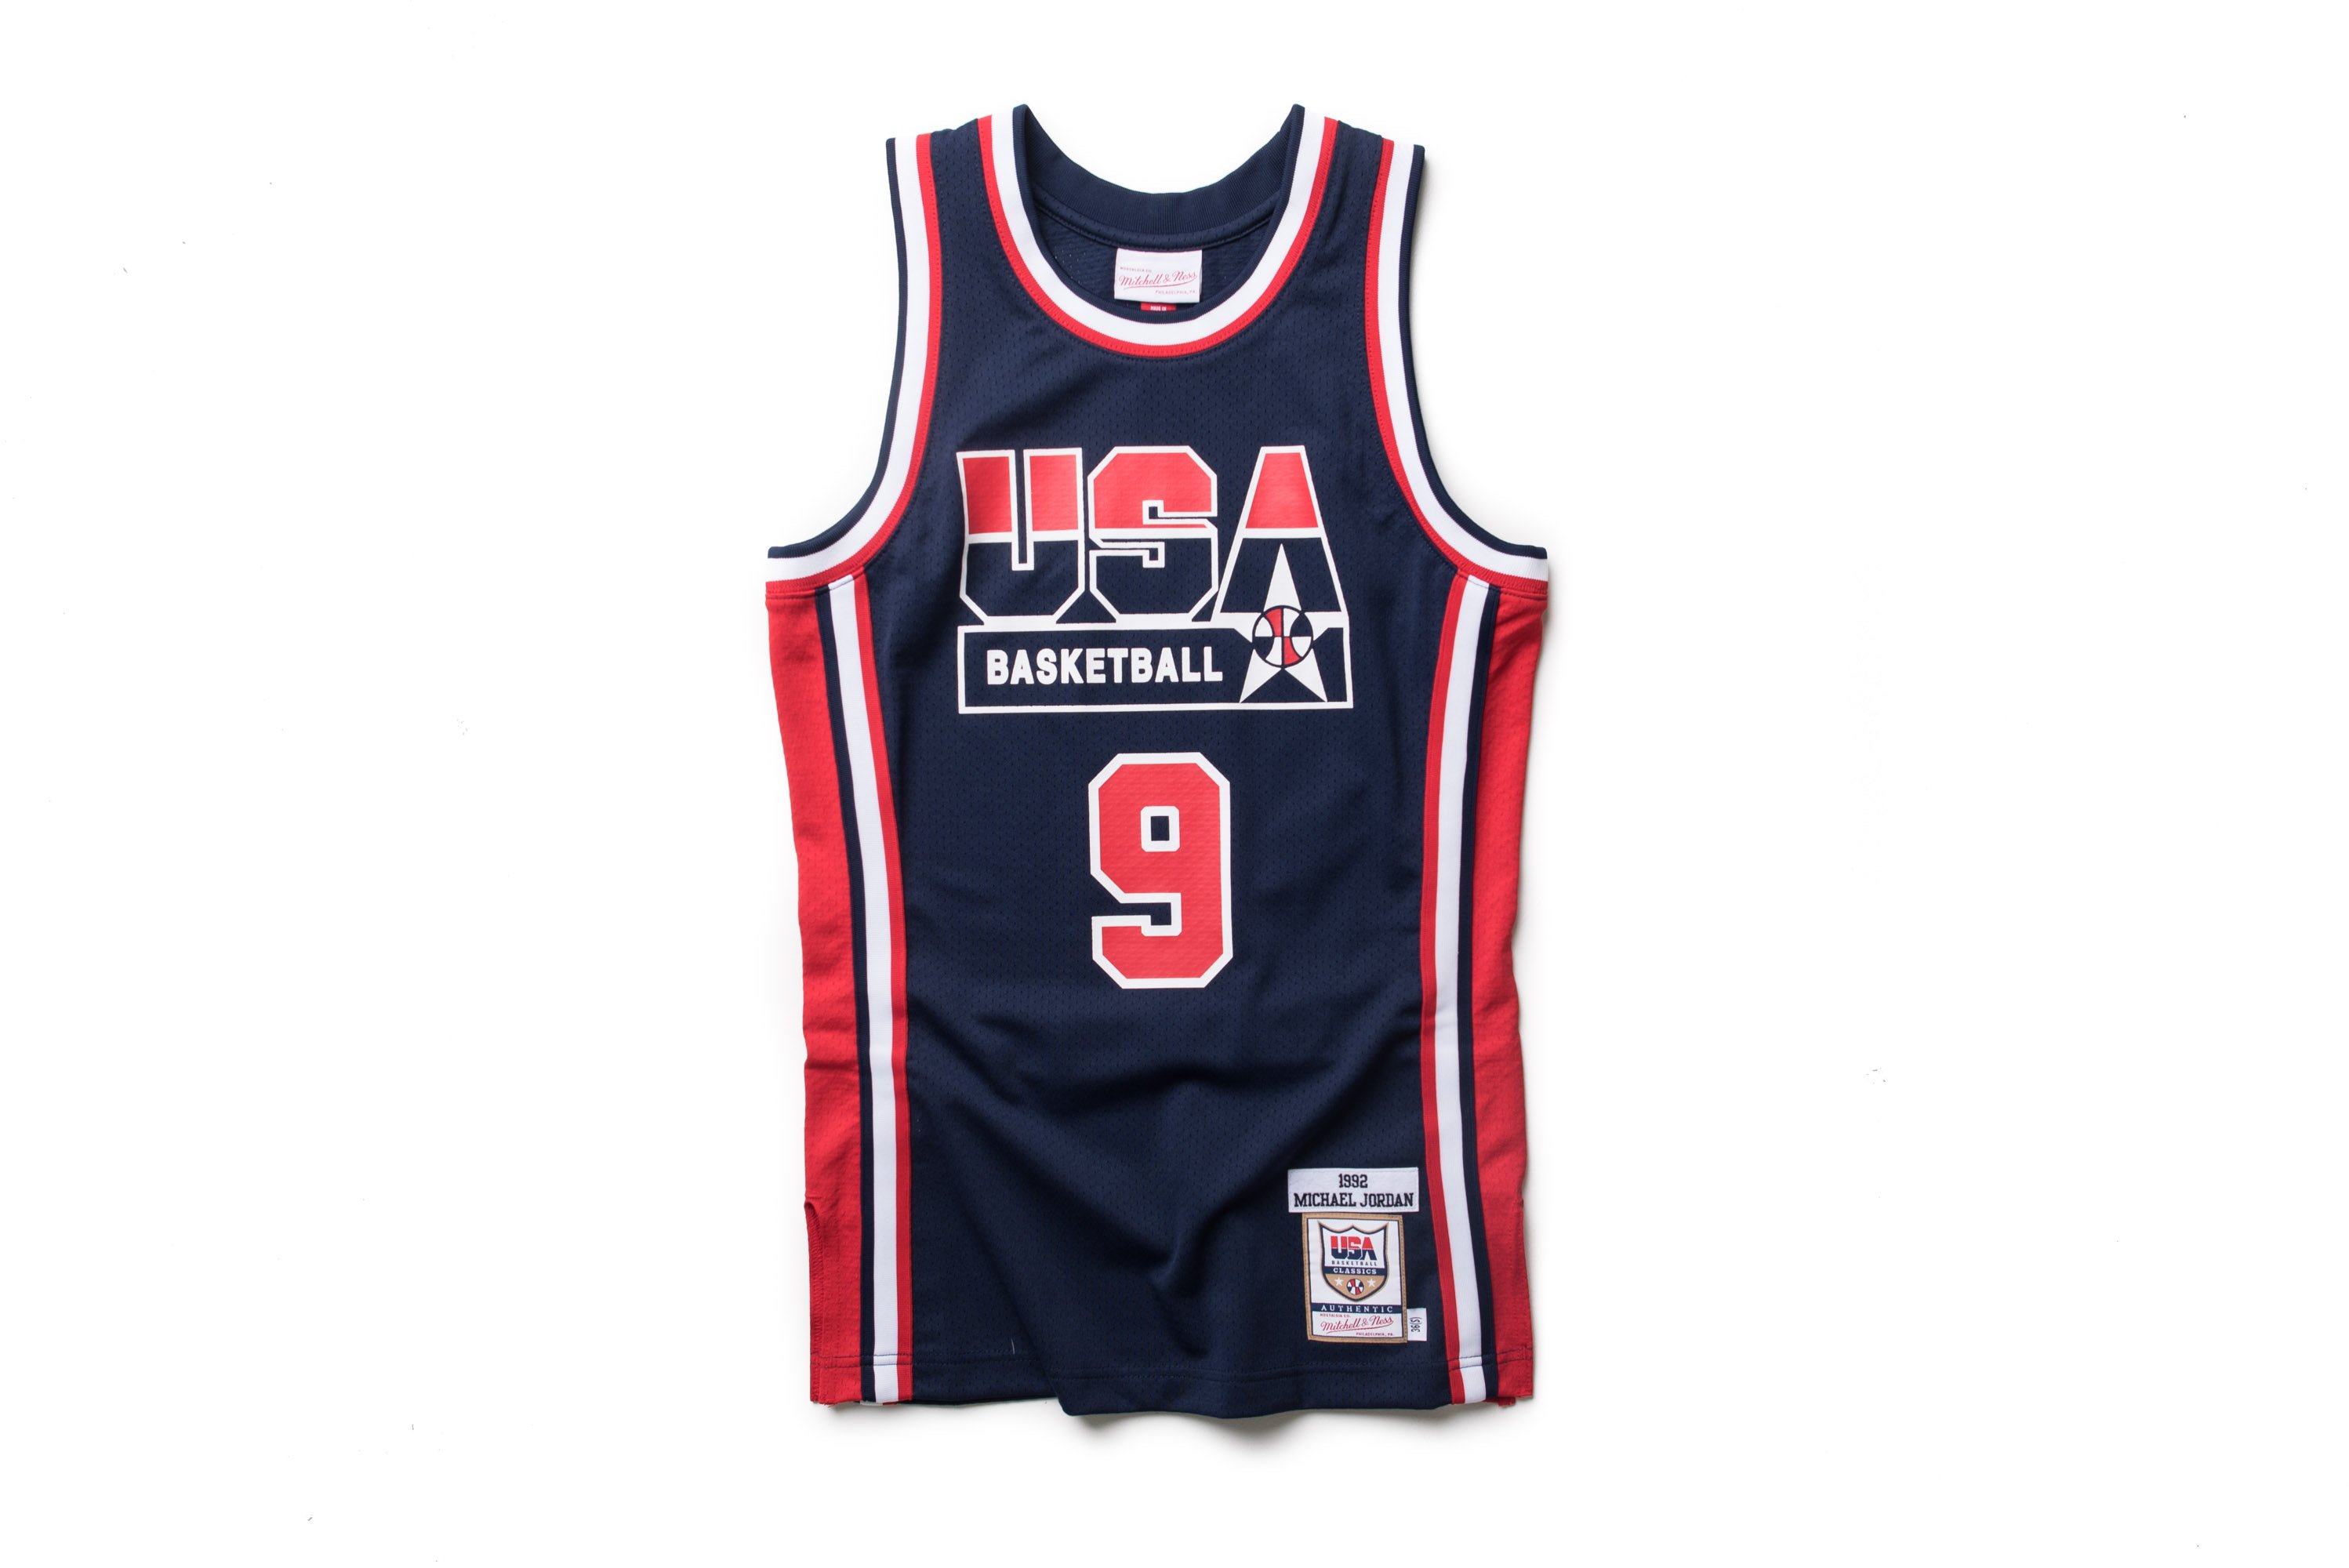 Mitchell & Ness Michael Jordan Dream Team USA Basketball Authentic Jersey  Large